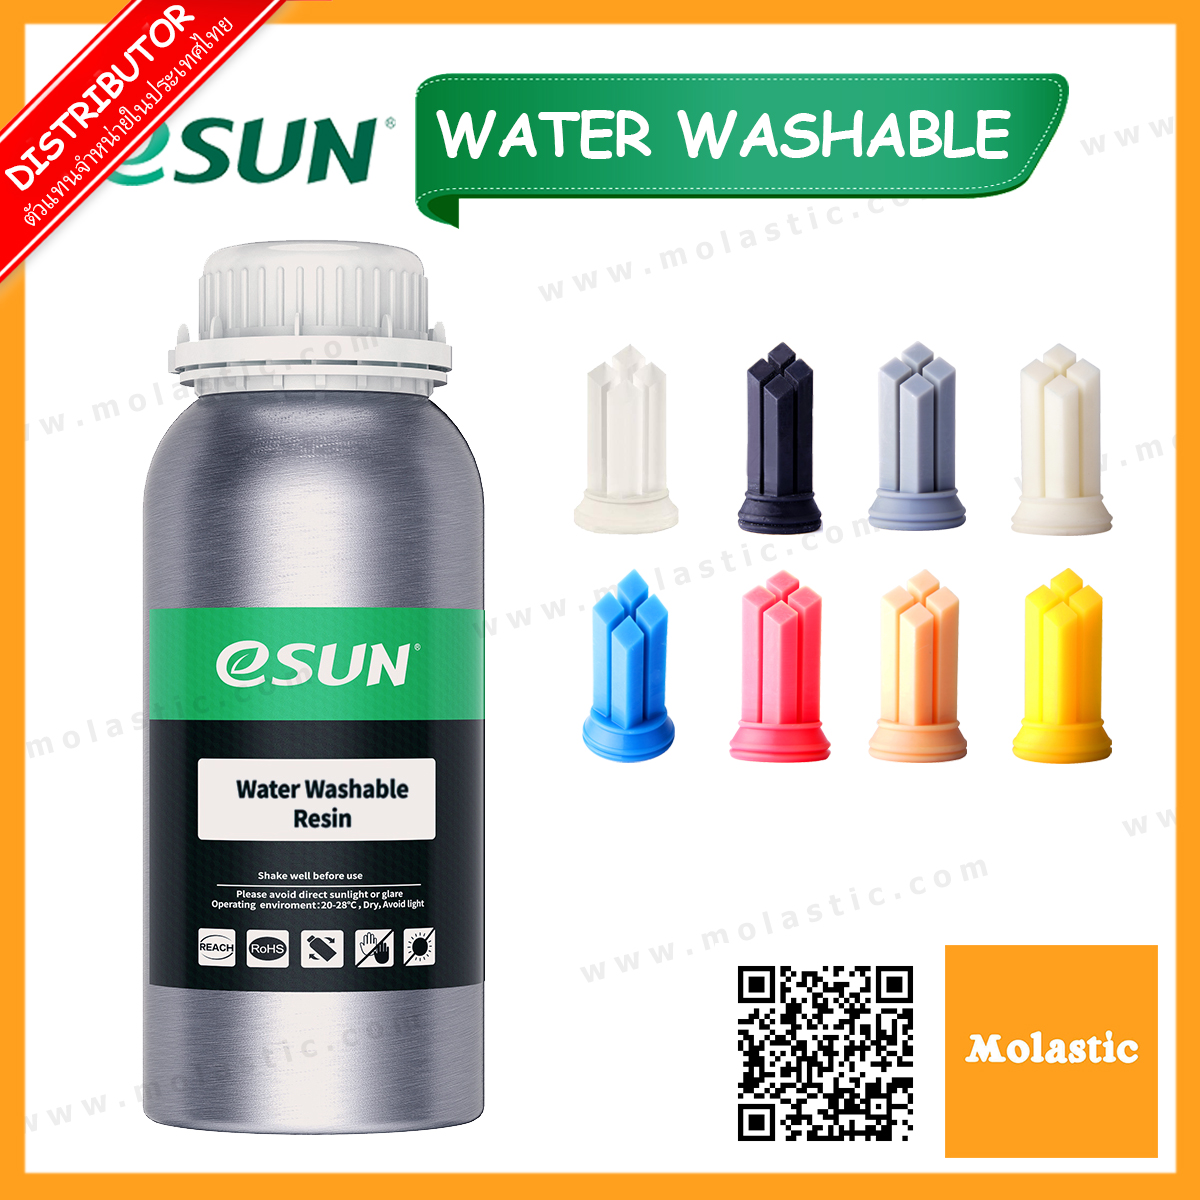 Water Washable Resin eSun 0.5 KG